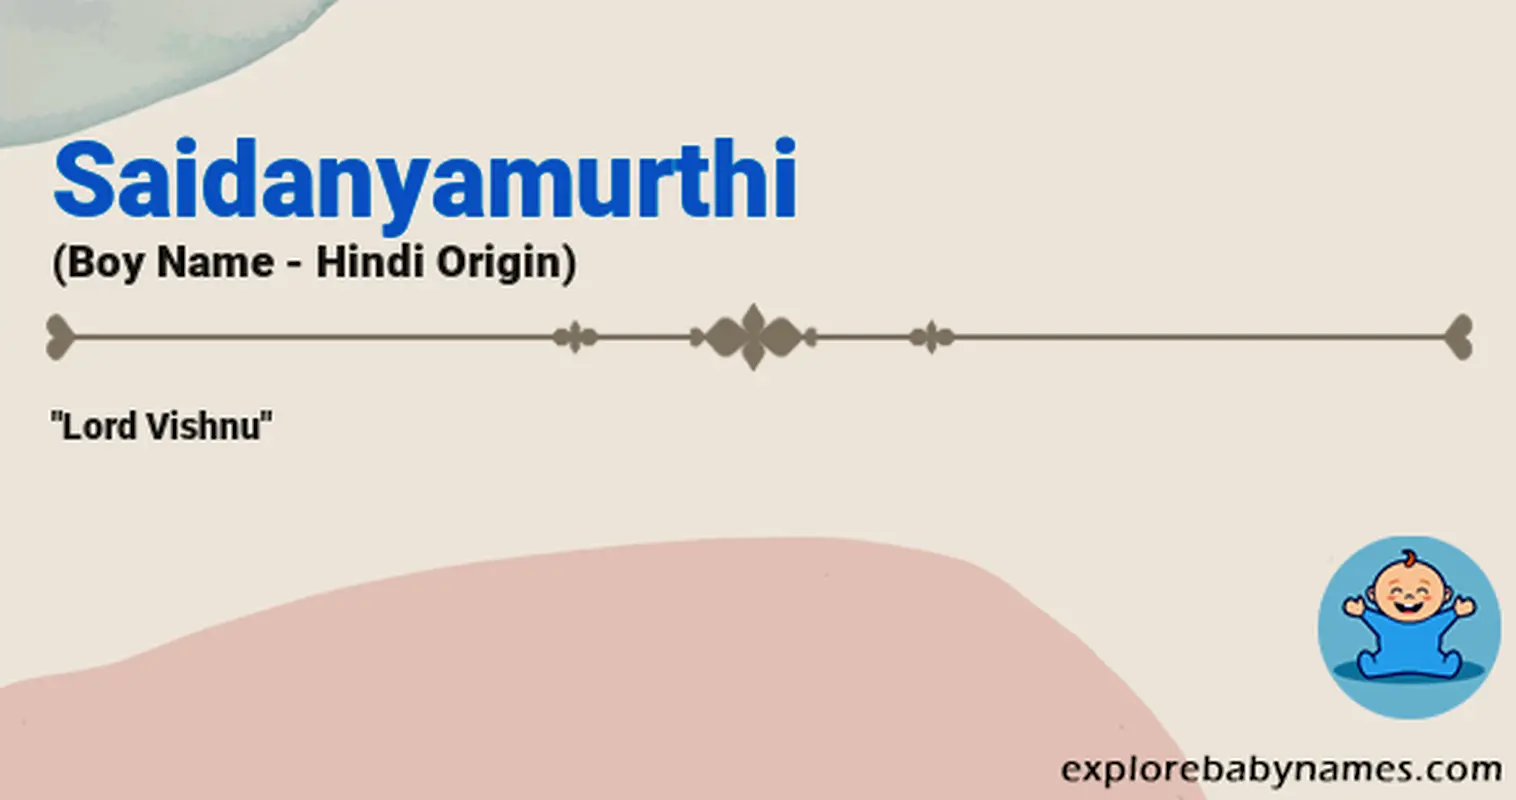 Meaning of Saidanyamurthi